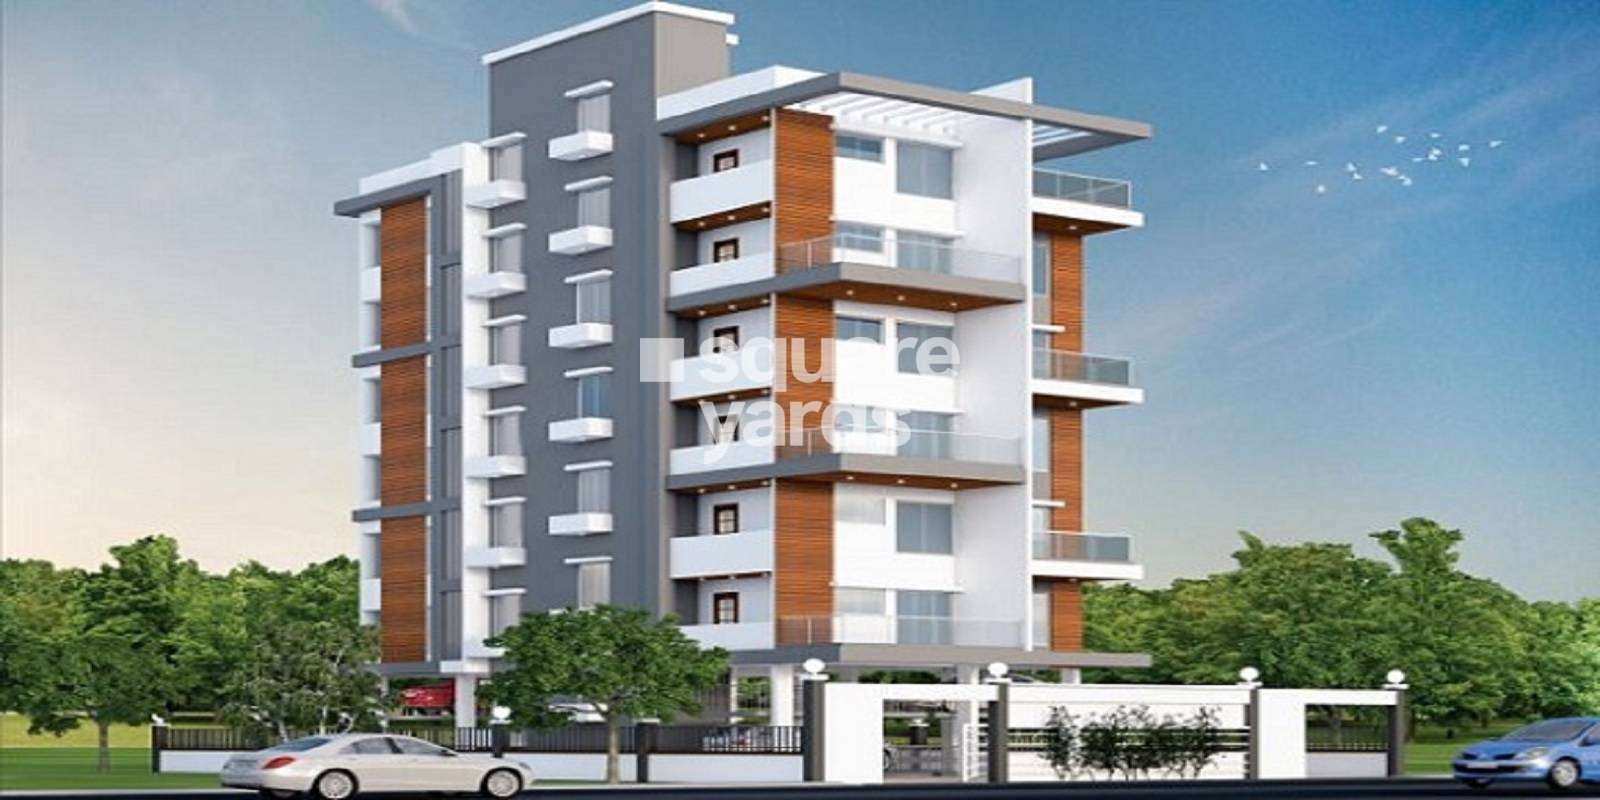 Parulekar Saam Apartments Cover Image